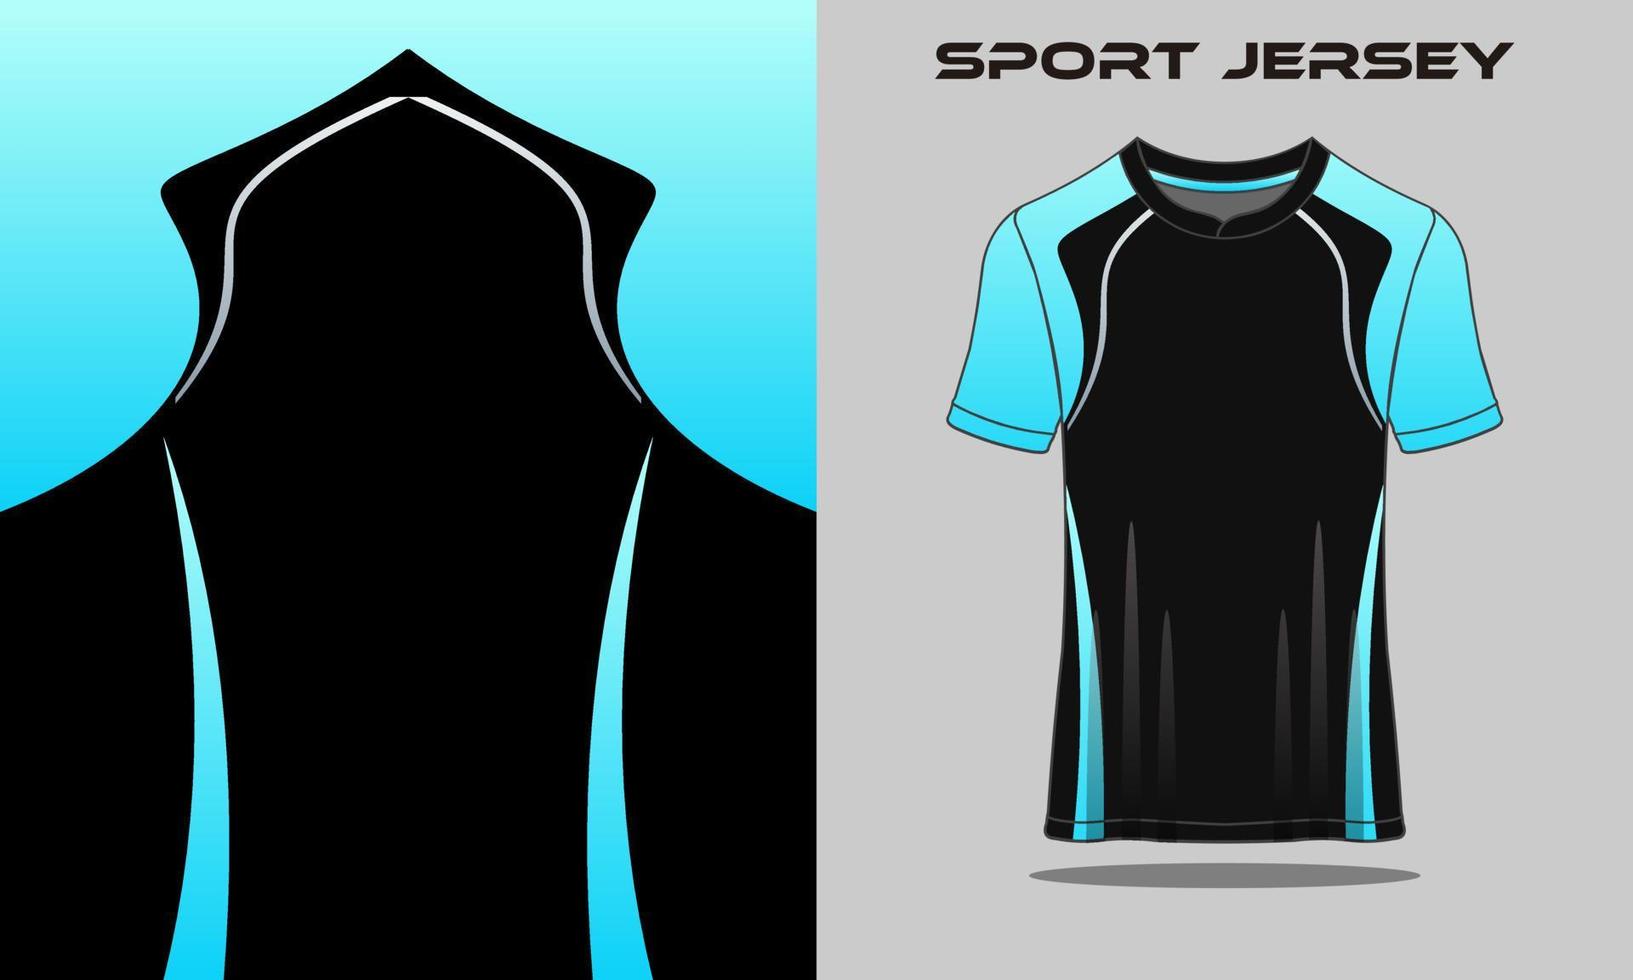 camiseta deportes abstrac textura footbal diseño para carreras fútbol gaming motocross gaming ciclismo vector